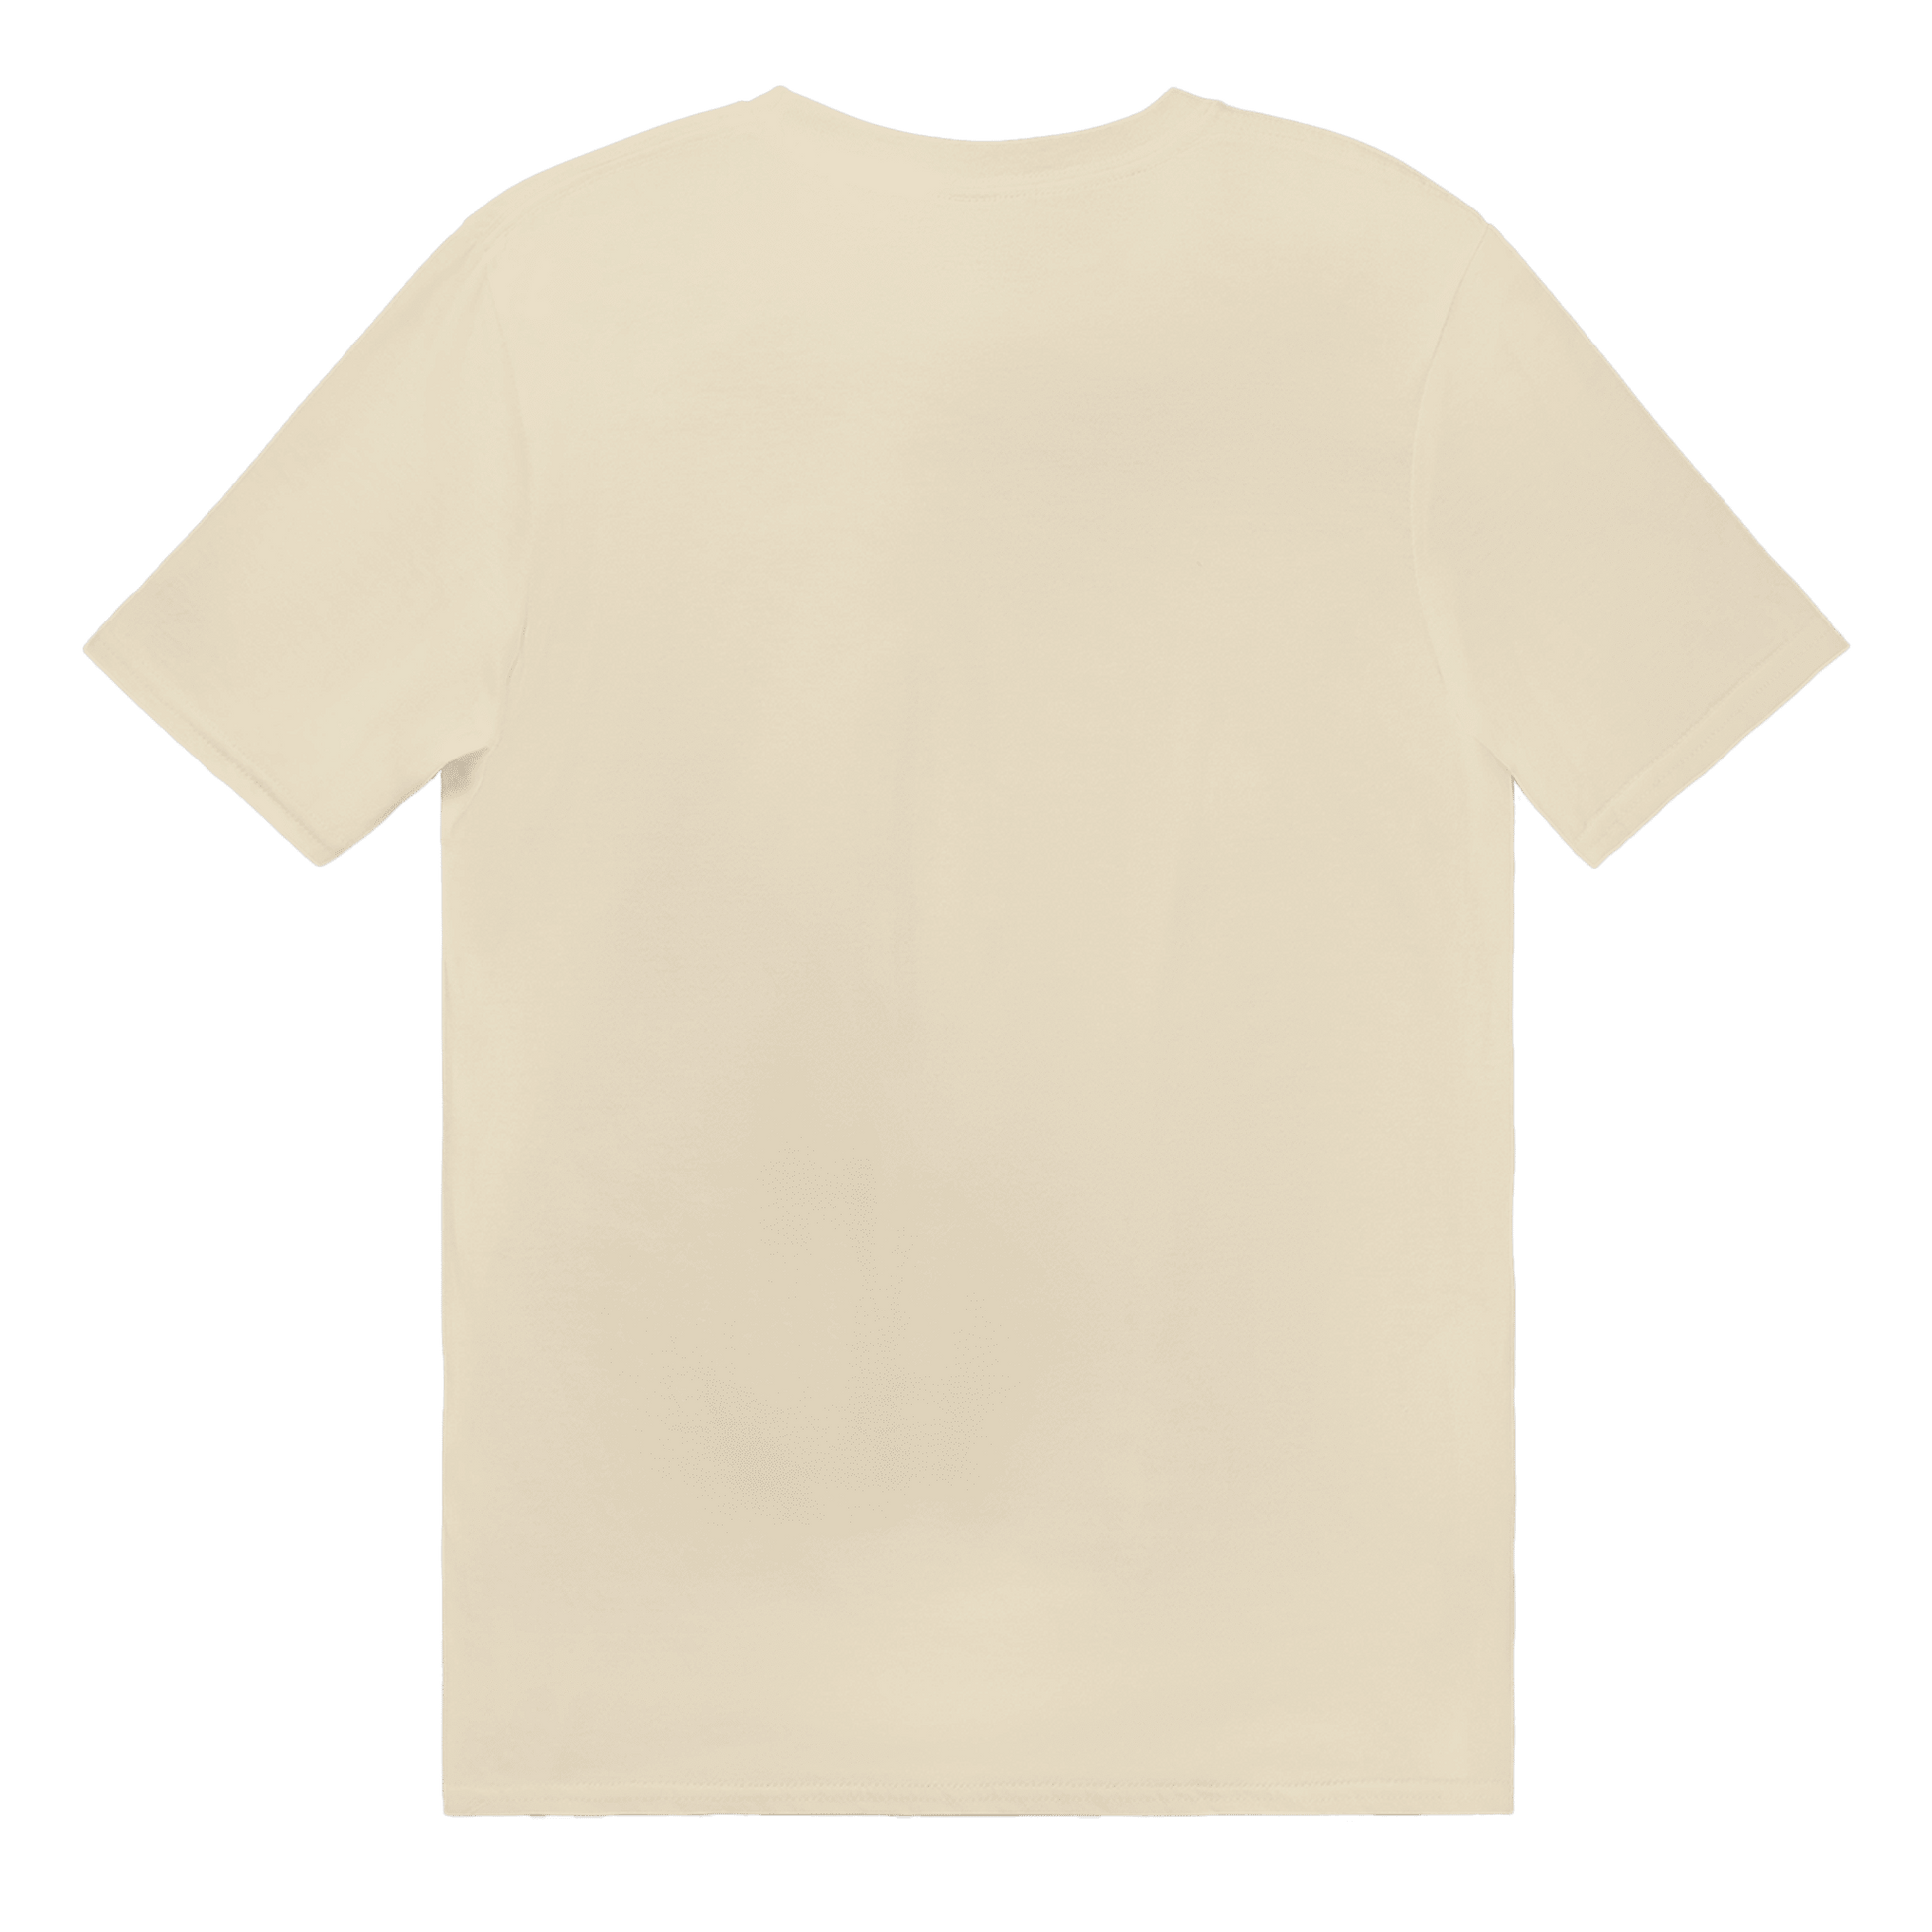 Smörgåstårta - T-shirt 